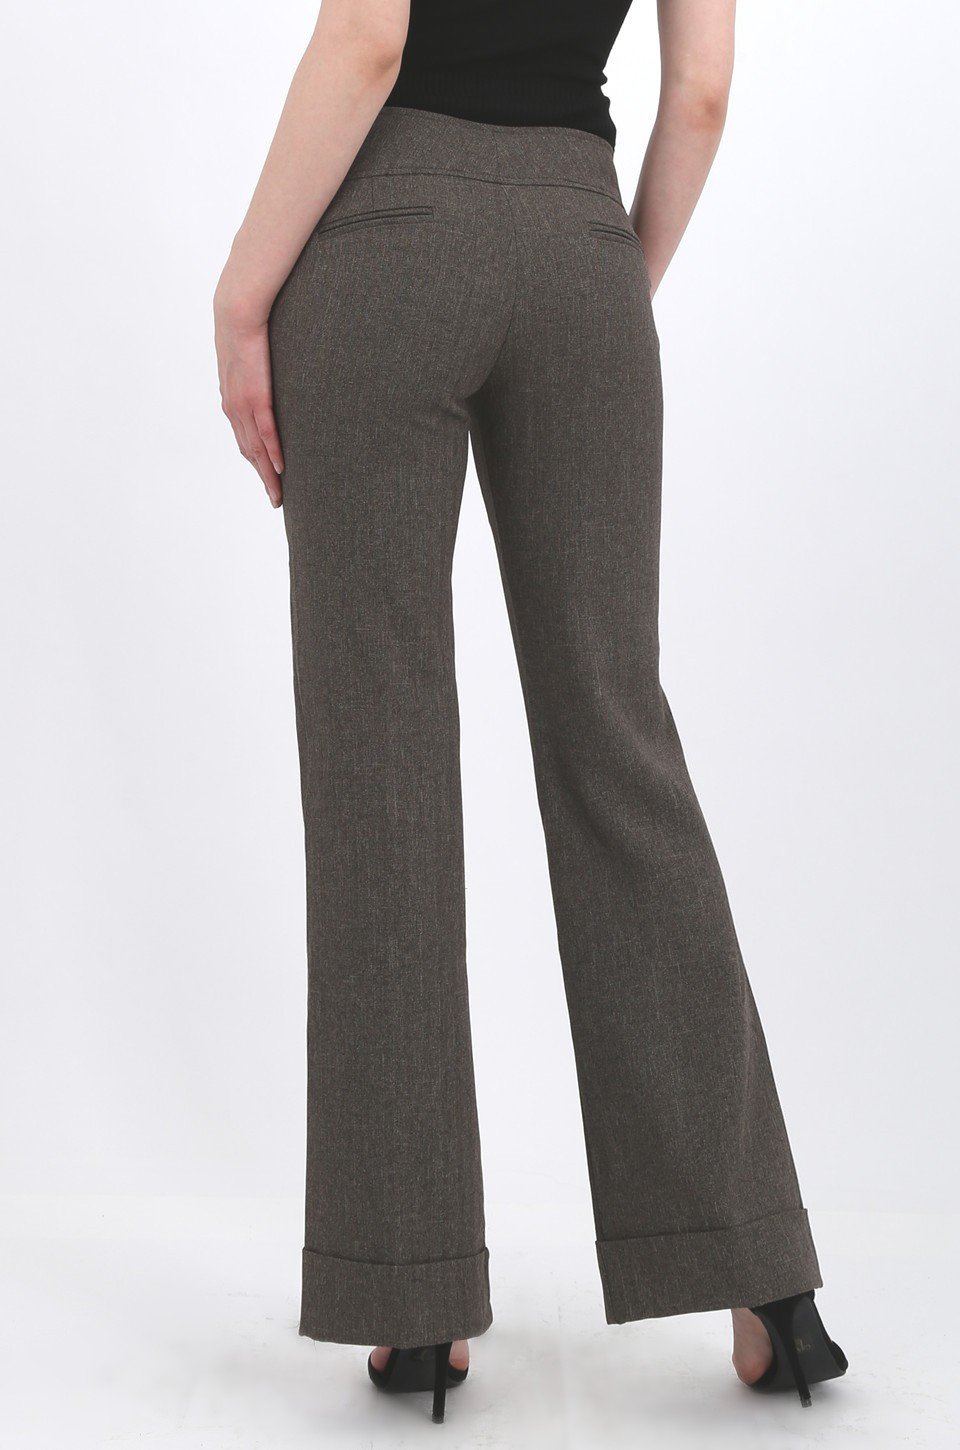 MISS PINKI Sage tailored cuffed work pants in coffee brown